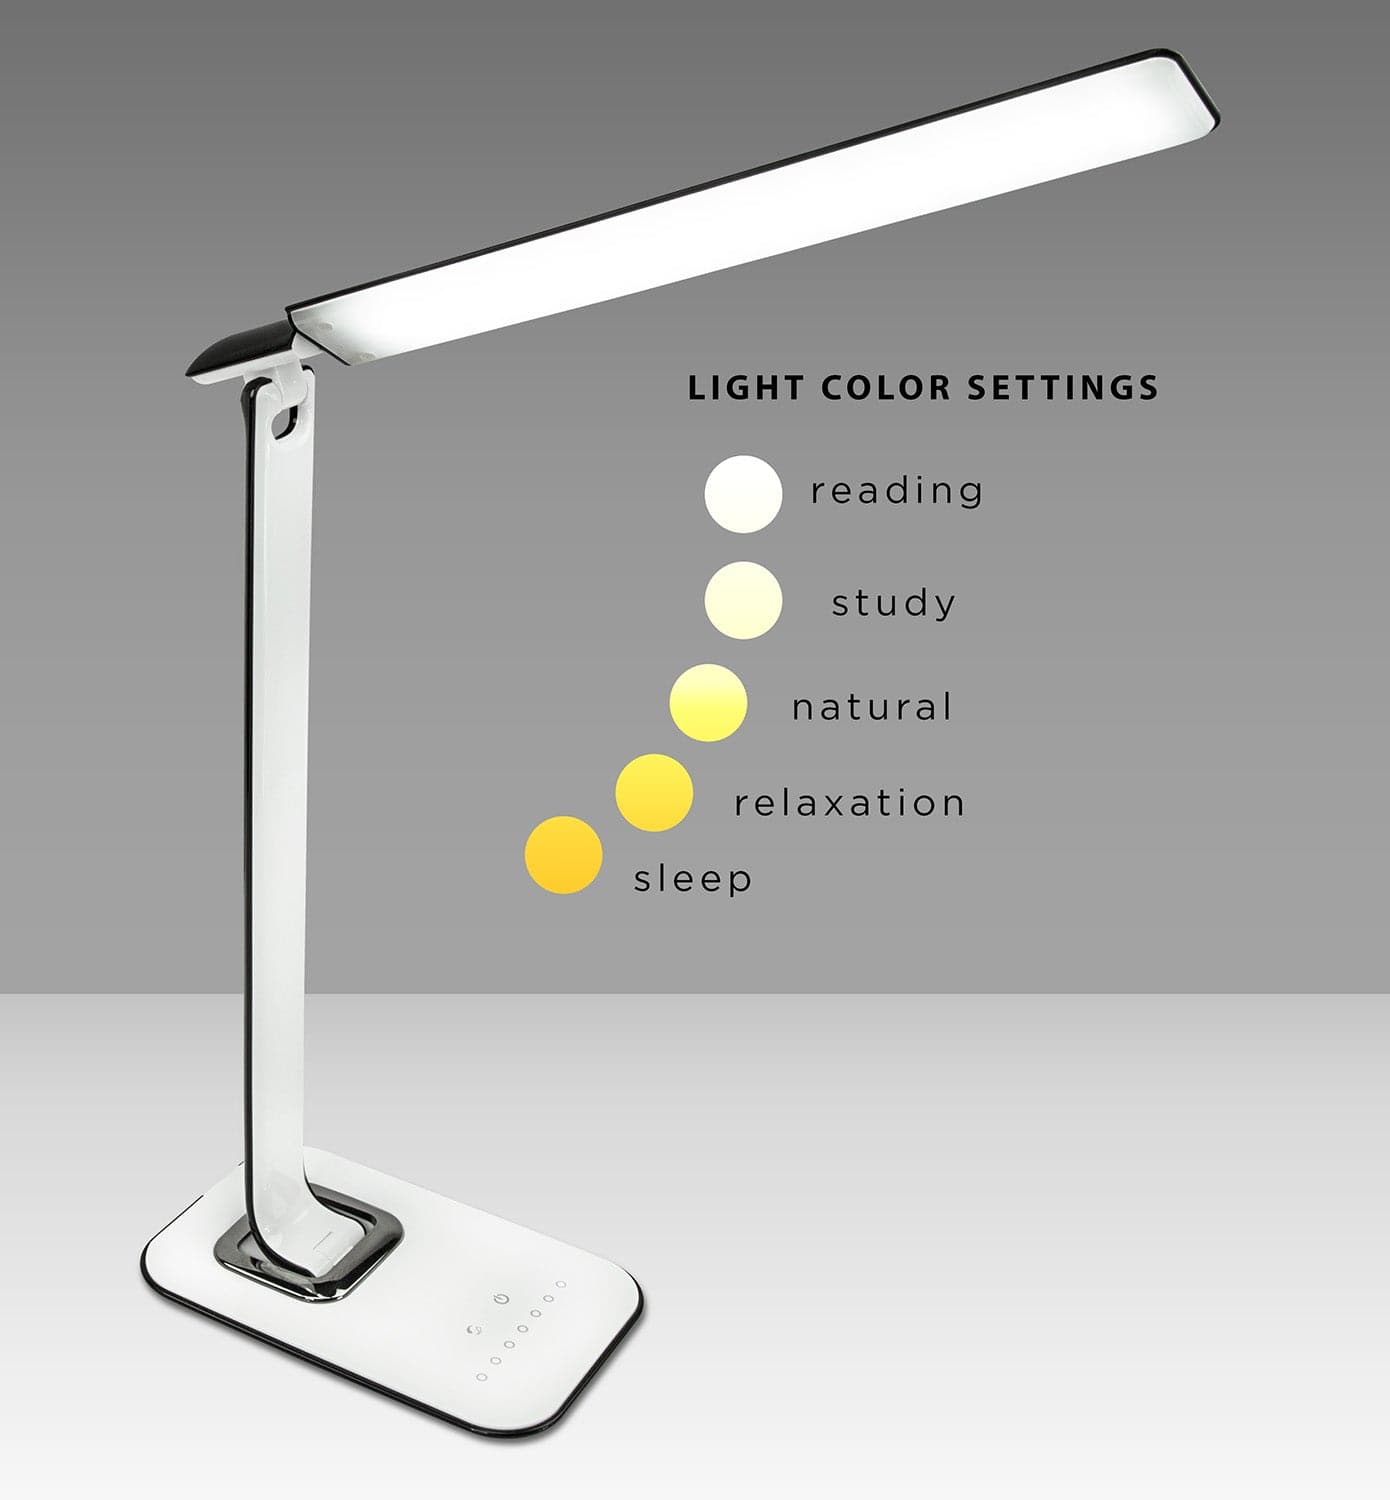 Turcom Relaxalight LED Desk Lamp